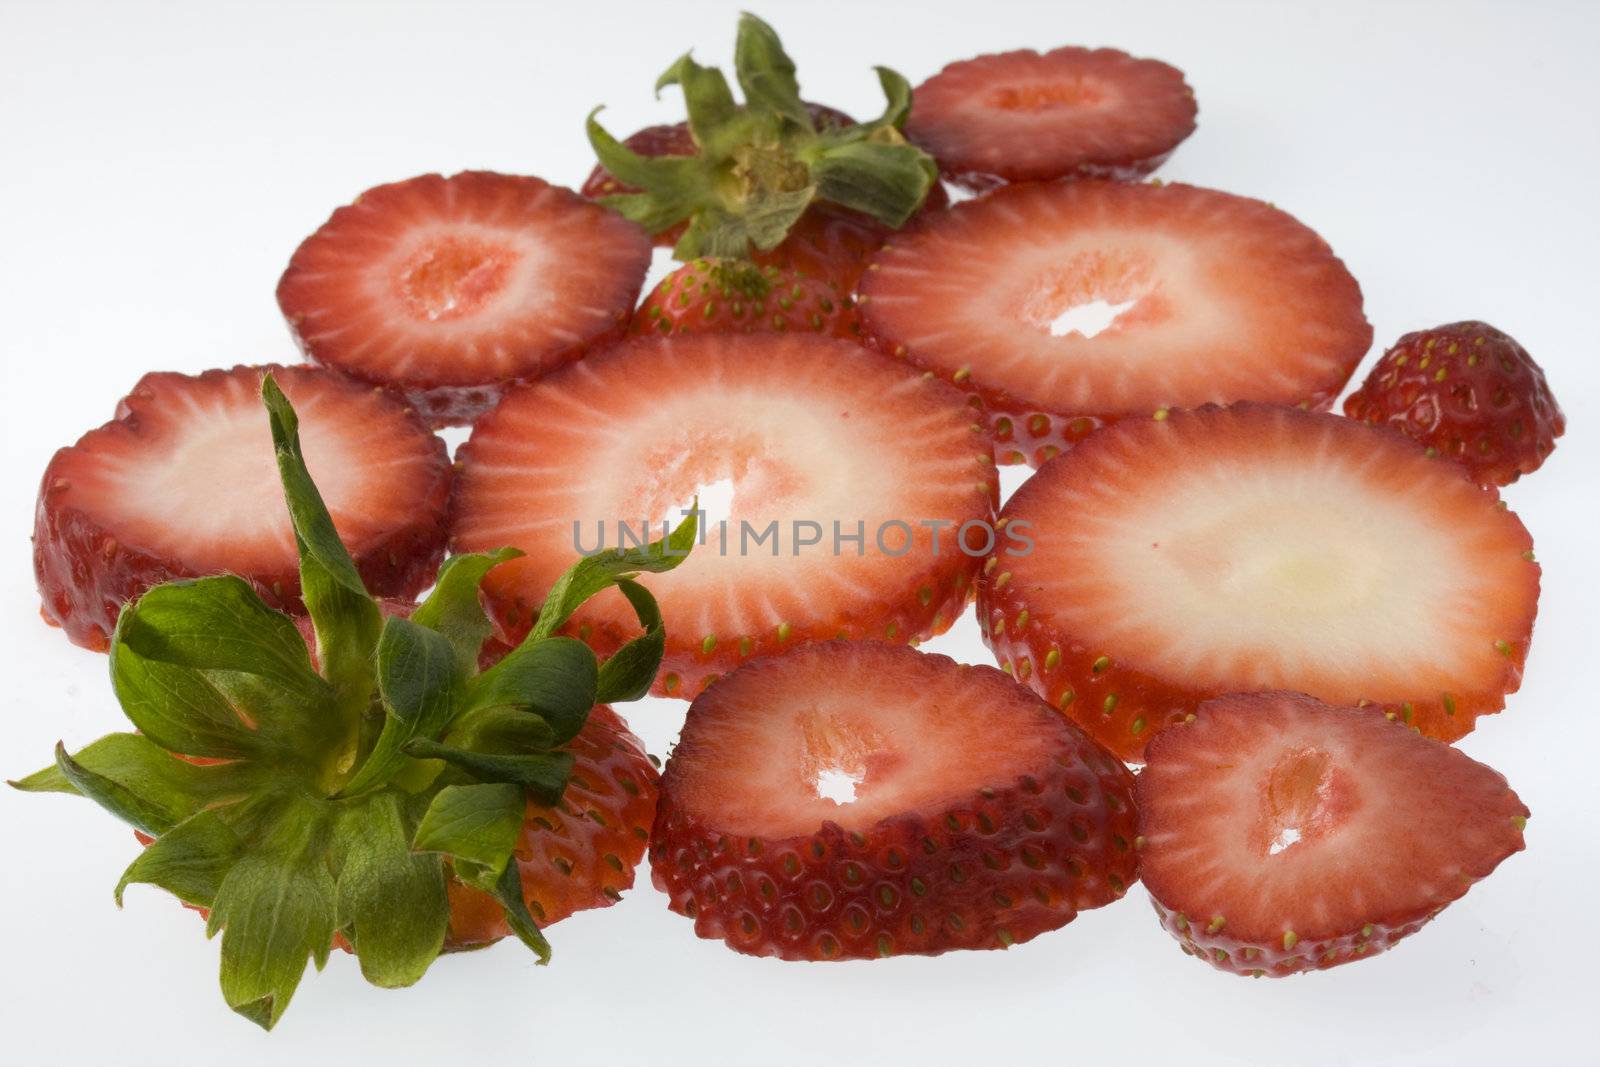 sliced strawberries by PixelsAway